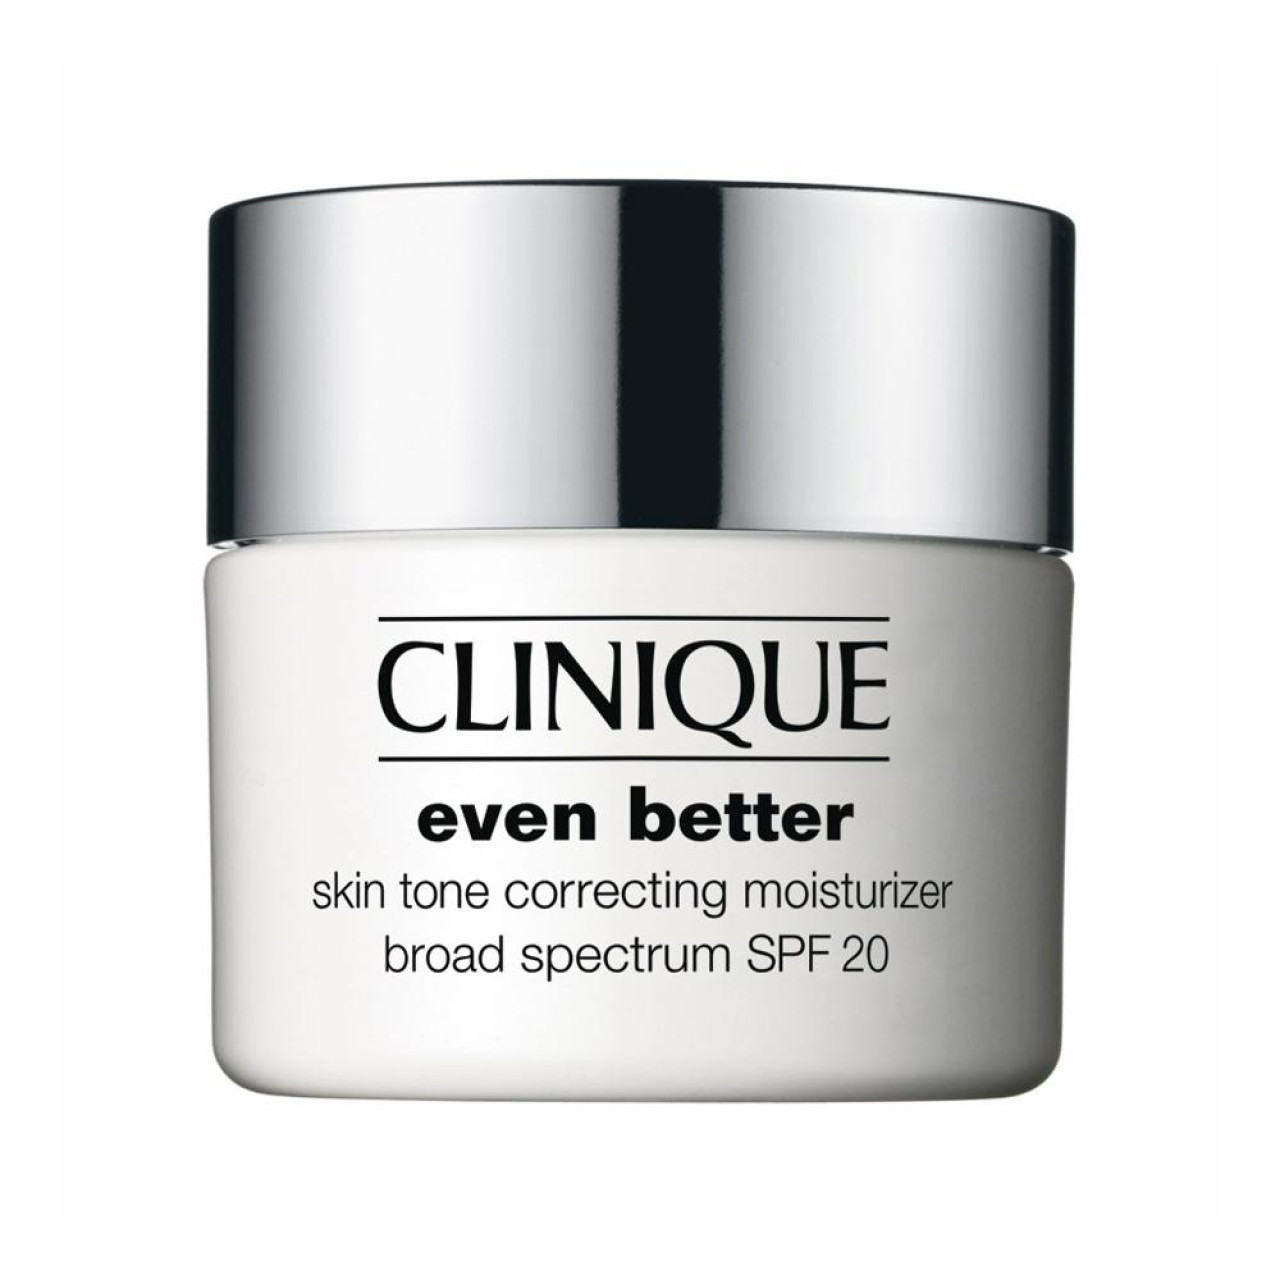 Clinique even better moisturizer 50ml